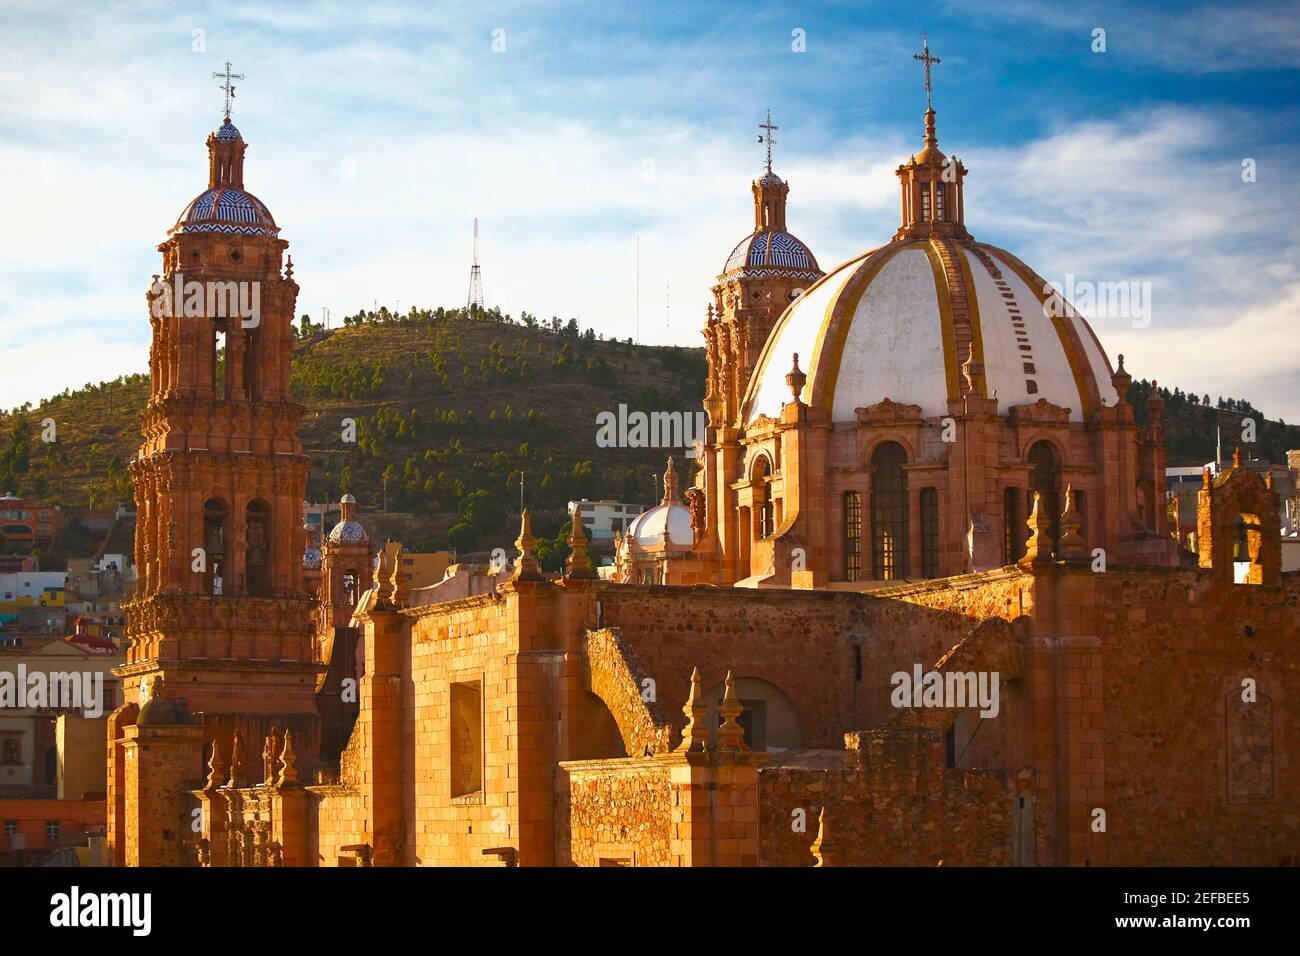 Kathedrale in einer Stadt, Zacatecas Staat, Mexiko Stockfoto